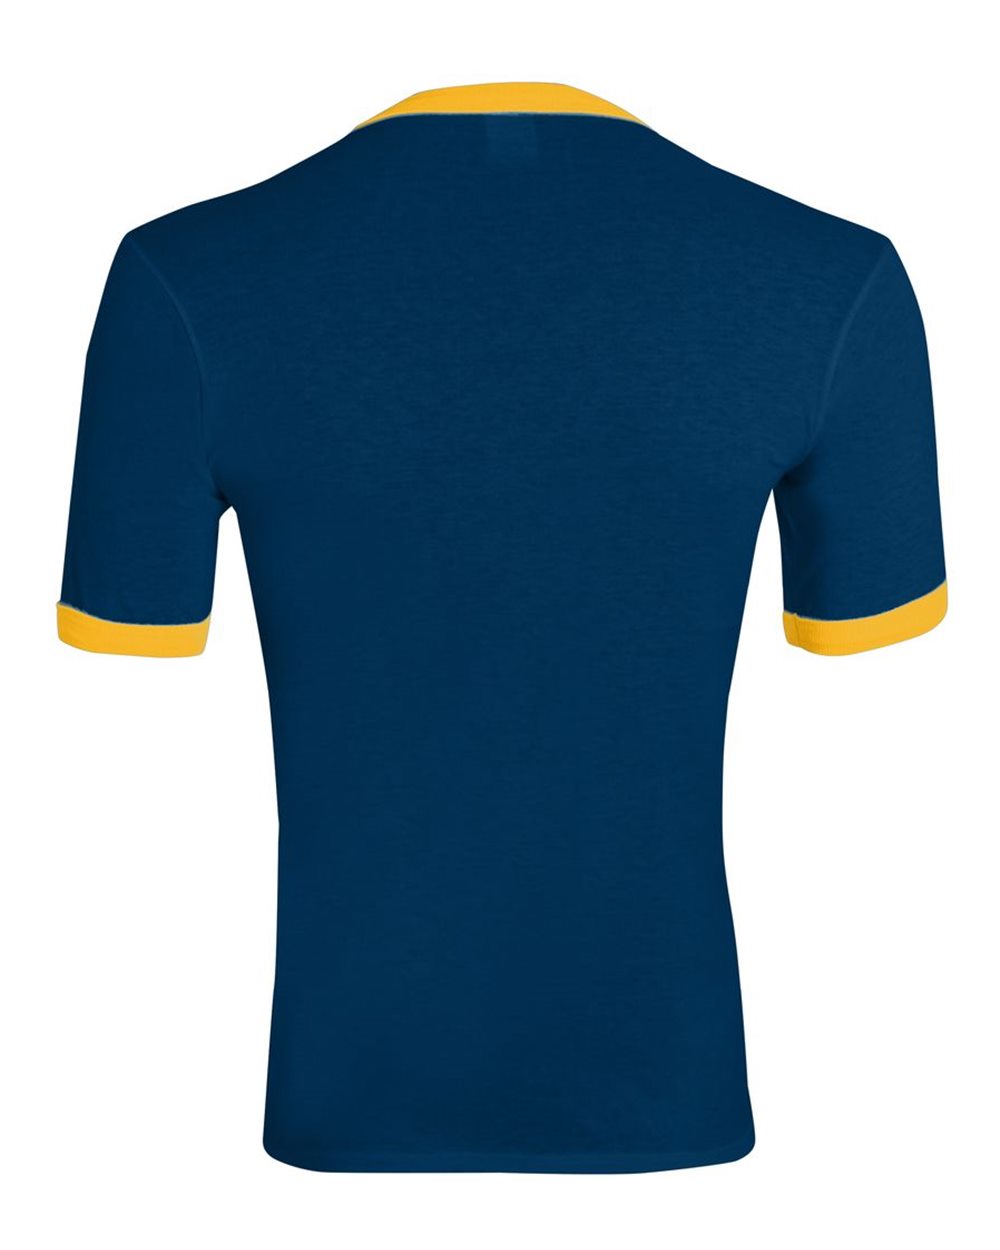 50/50 Ringer T-Shirt - 710-Augusta Sportswear